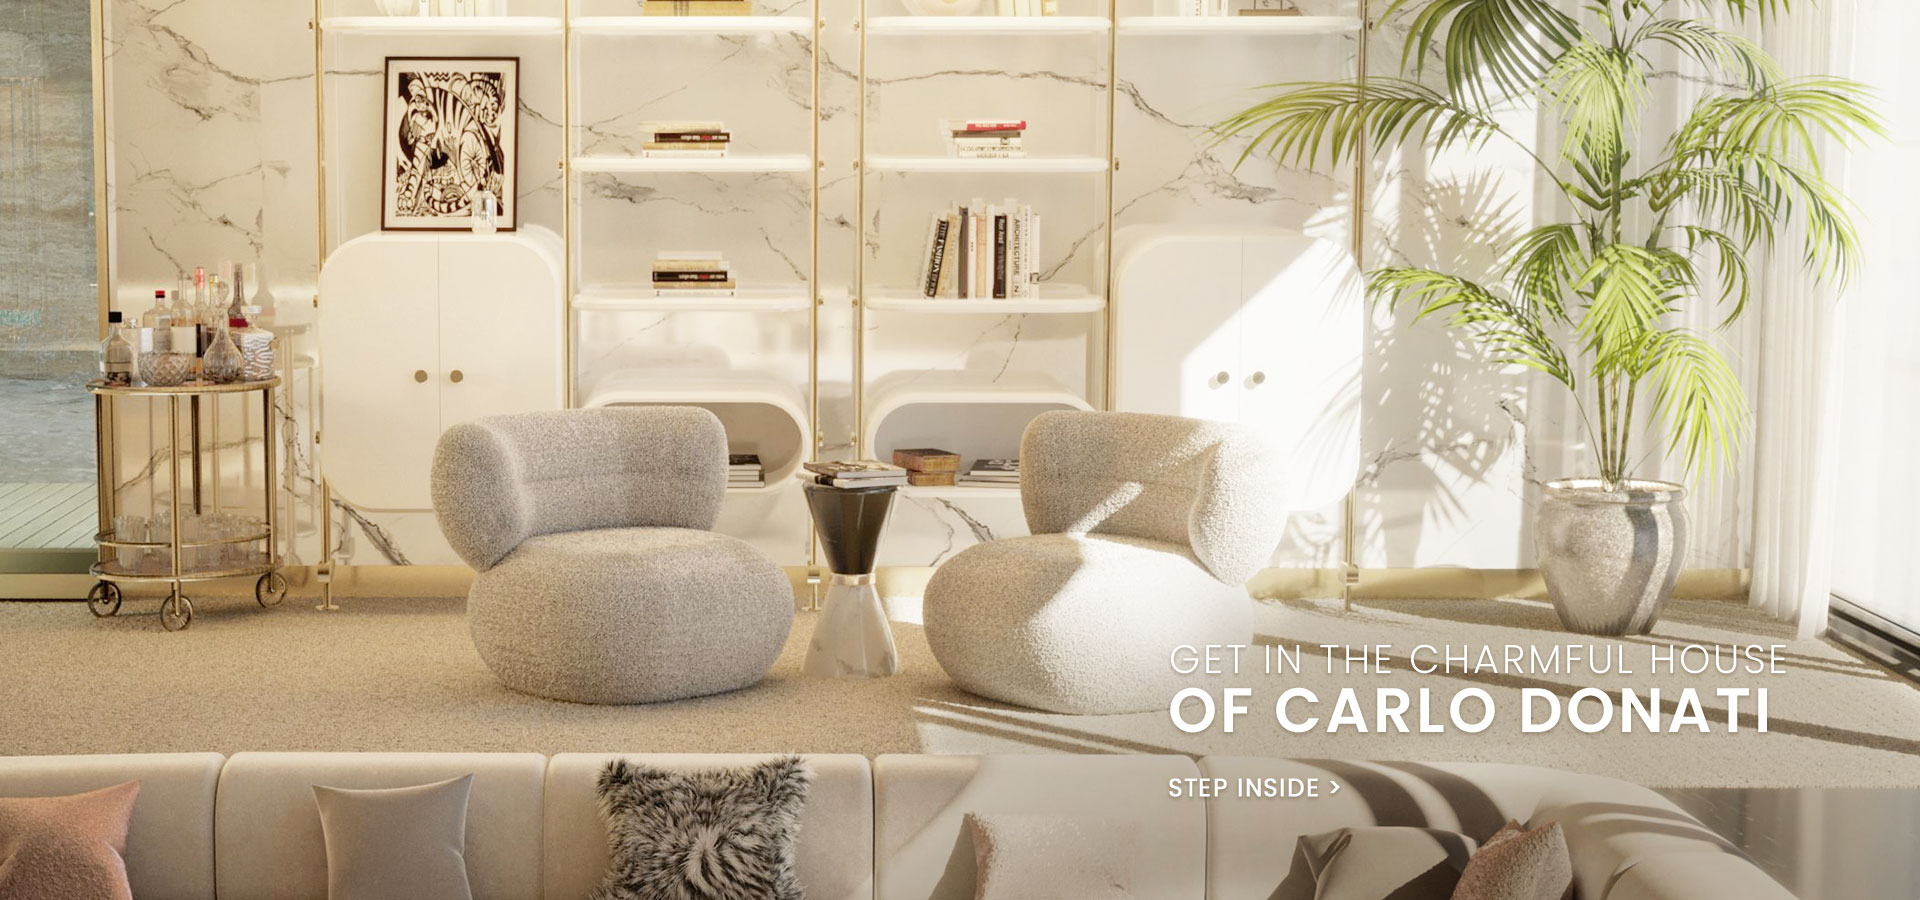 carlodonatihousevt boho style How To Hit The Boho Style In A Interior Design Project? saint tropez carlo donati home